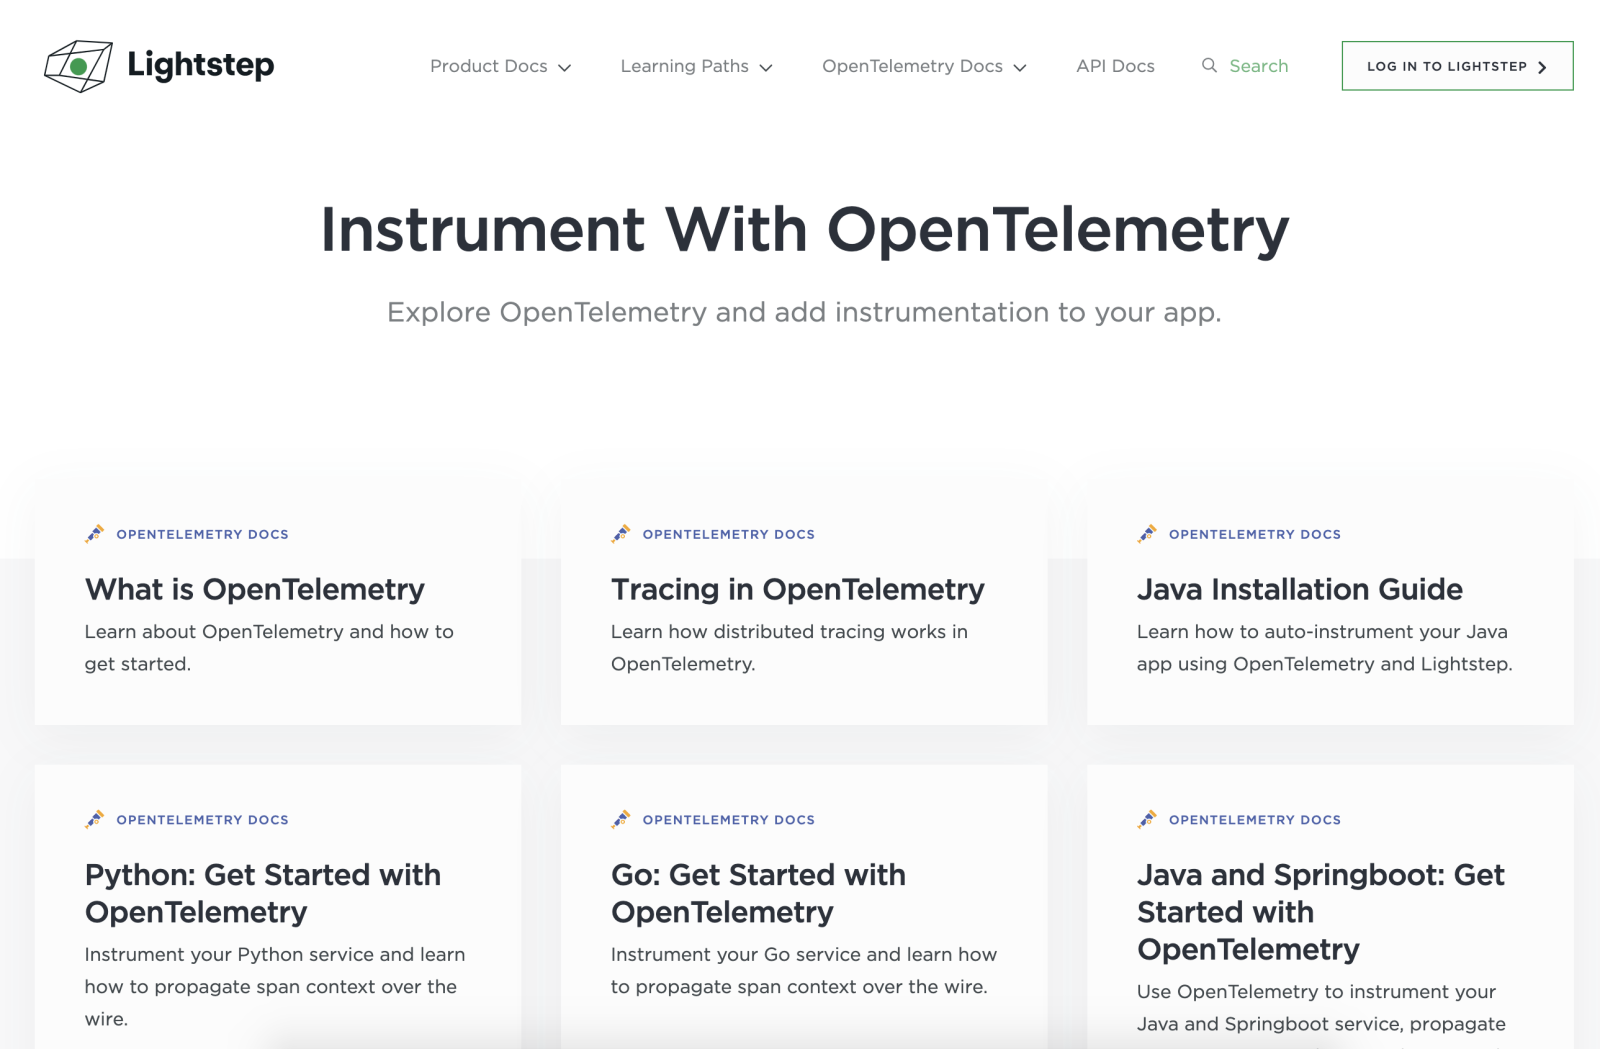 Lightstep Learning Portal - OpenTelemetry Content